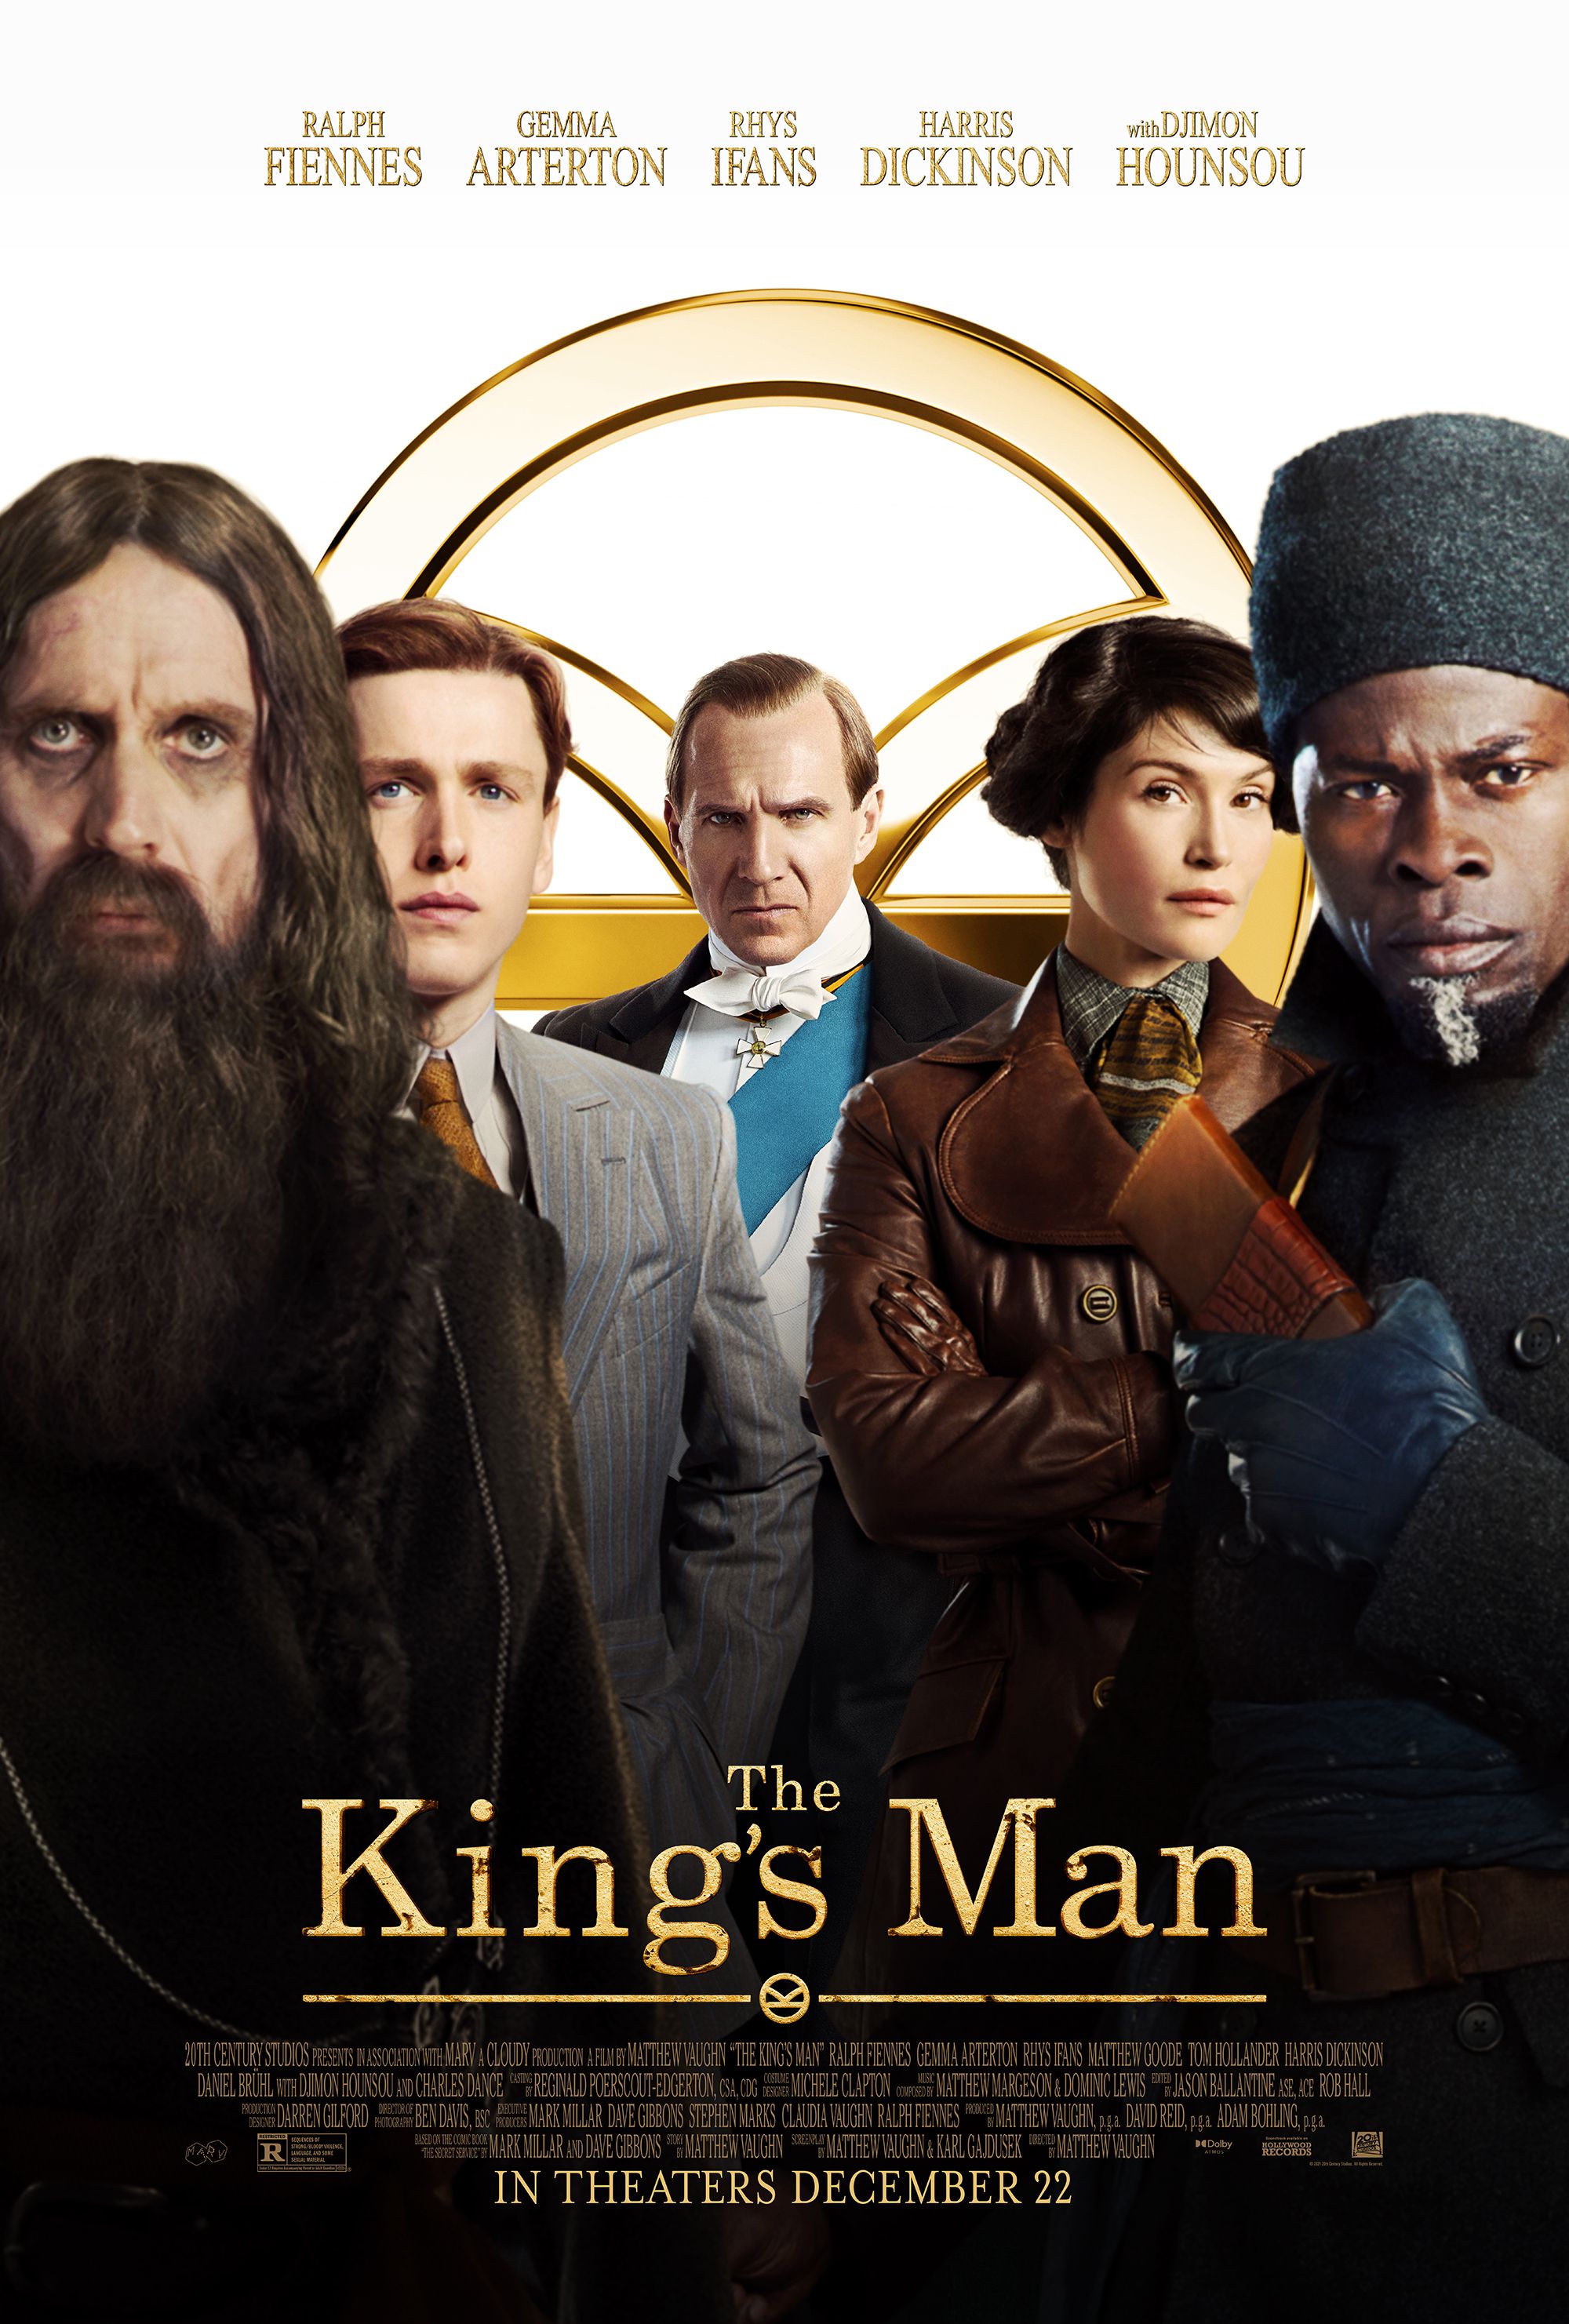 The Kings Man (2021) Hindi Dubbed Full Movie